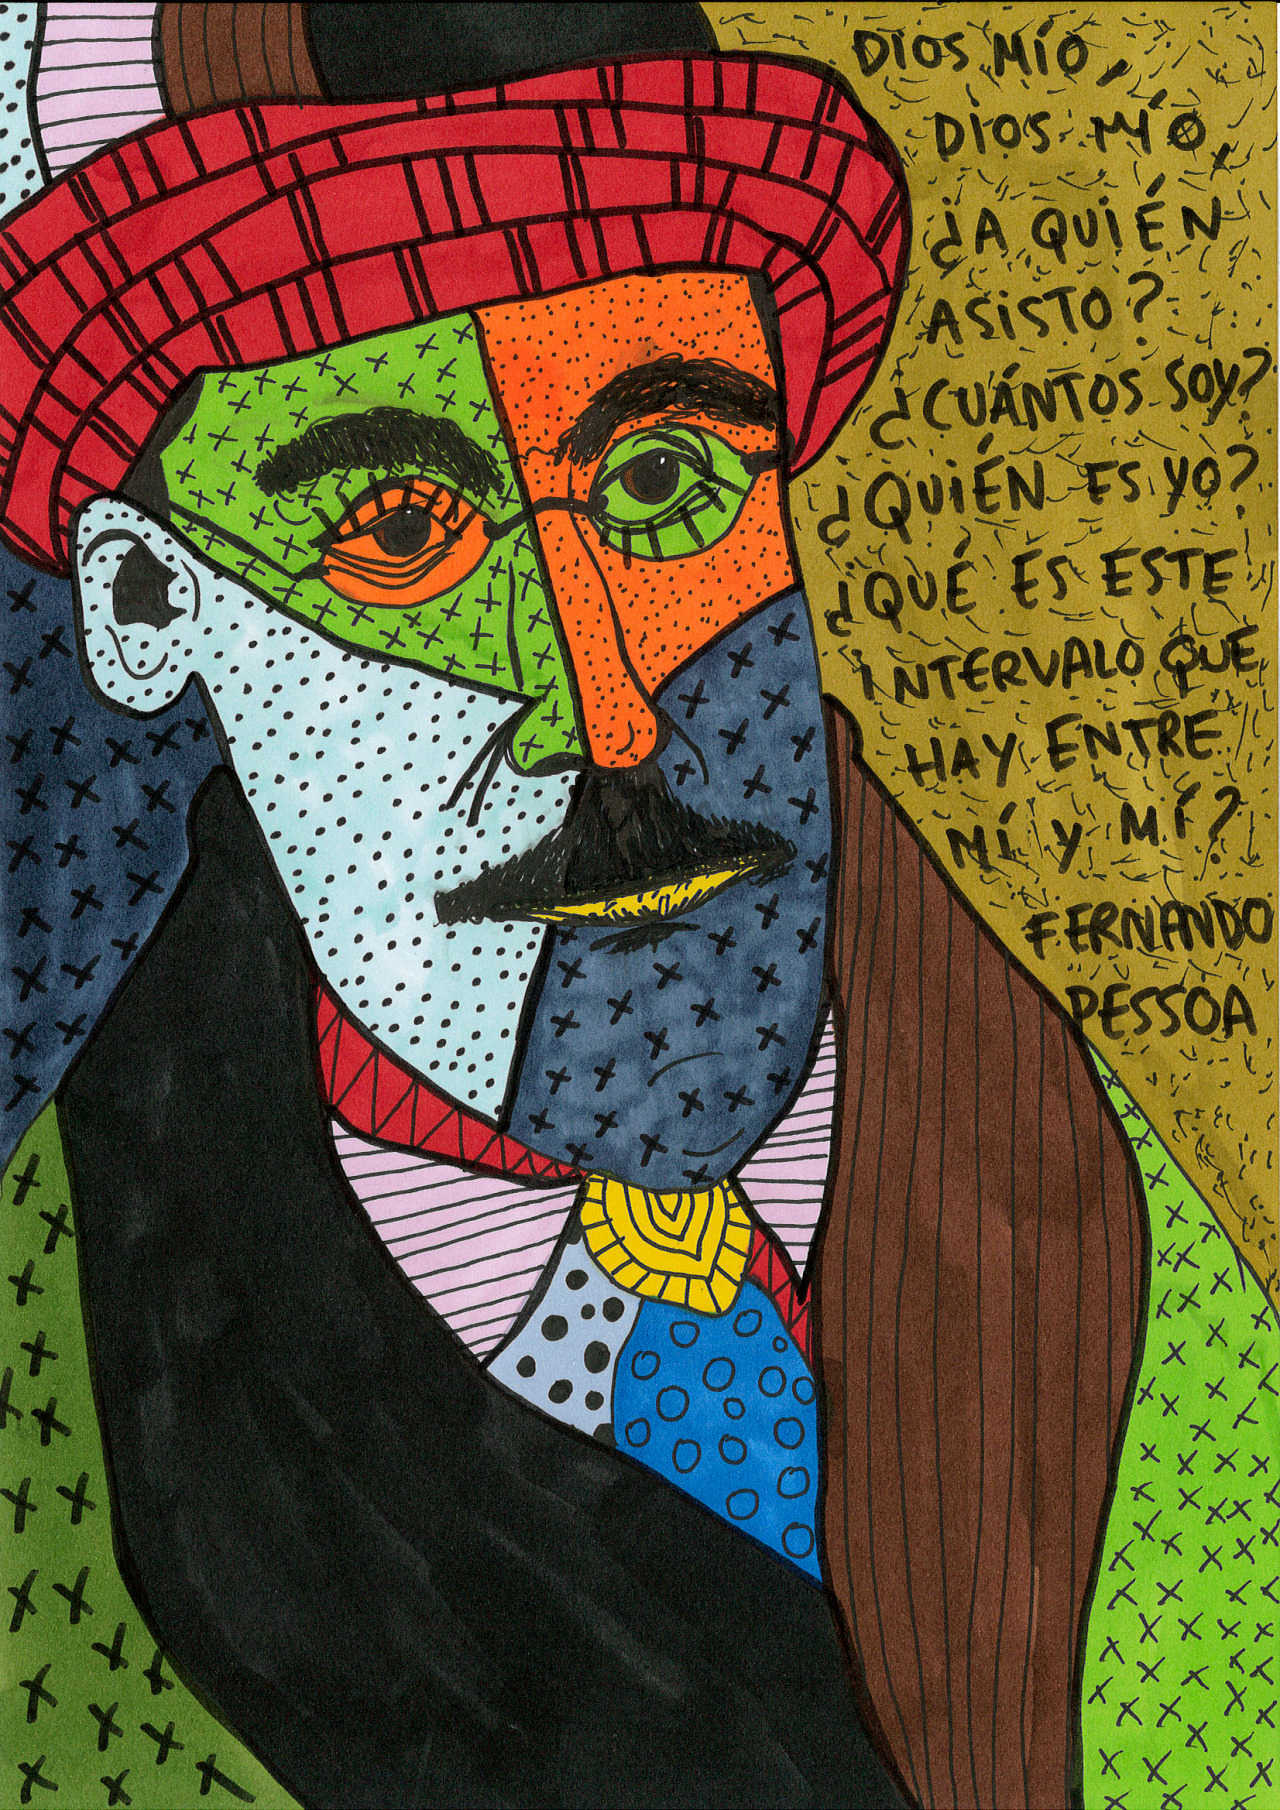    “Fernando Pessoa” , 2013   Marker and pen on paper, 21 x 29.7 cm 